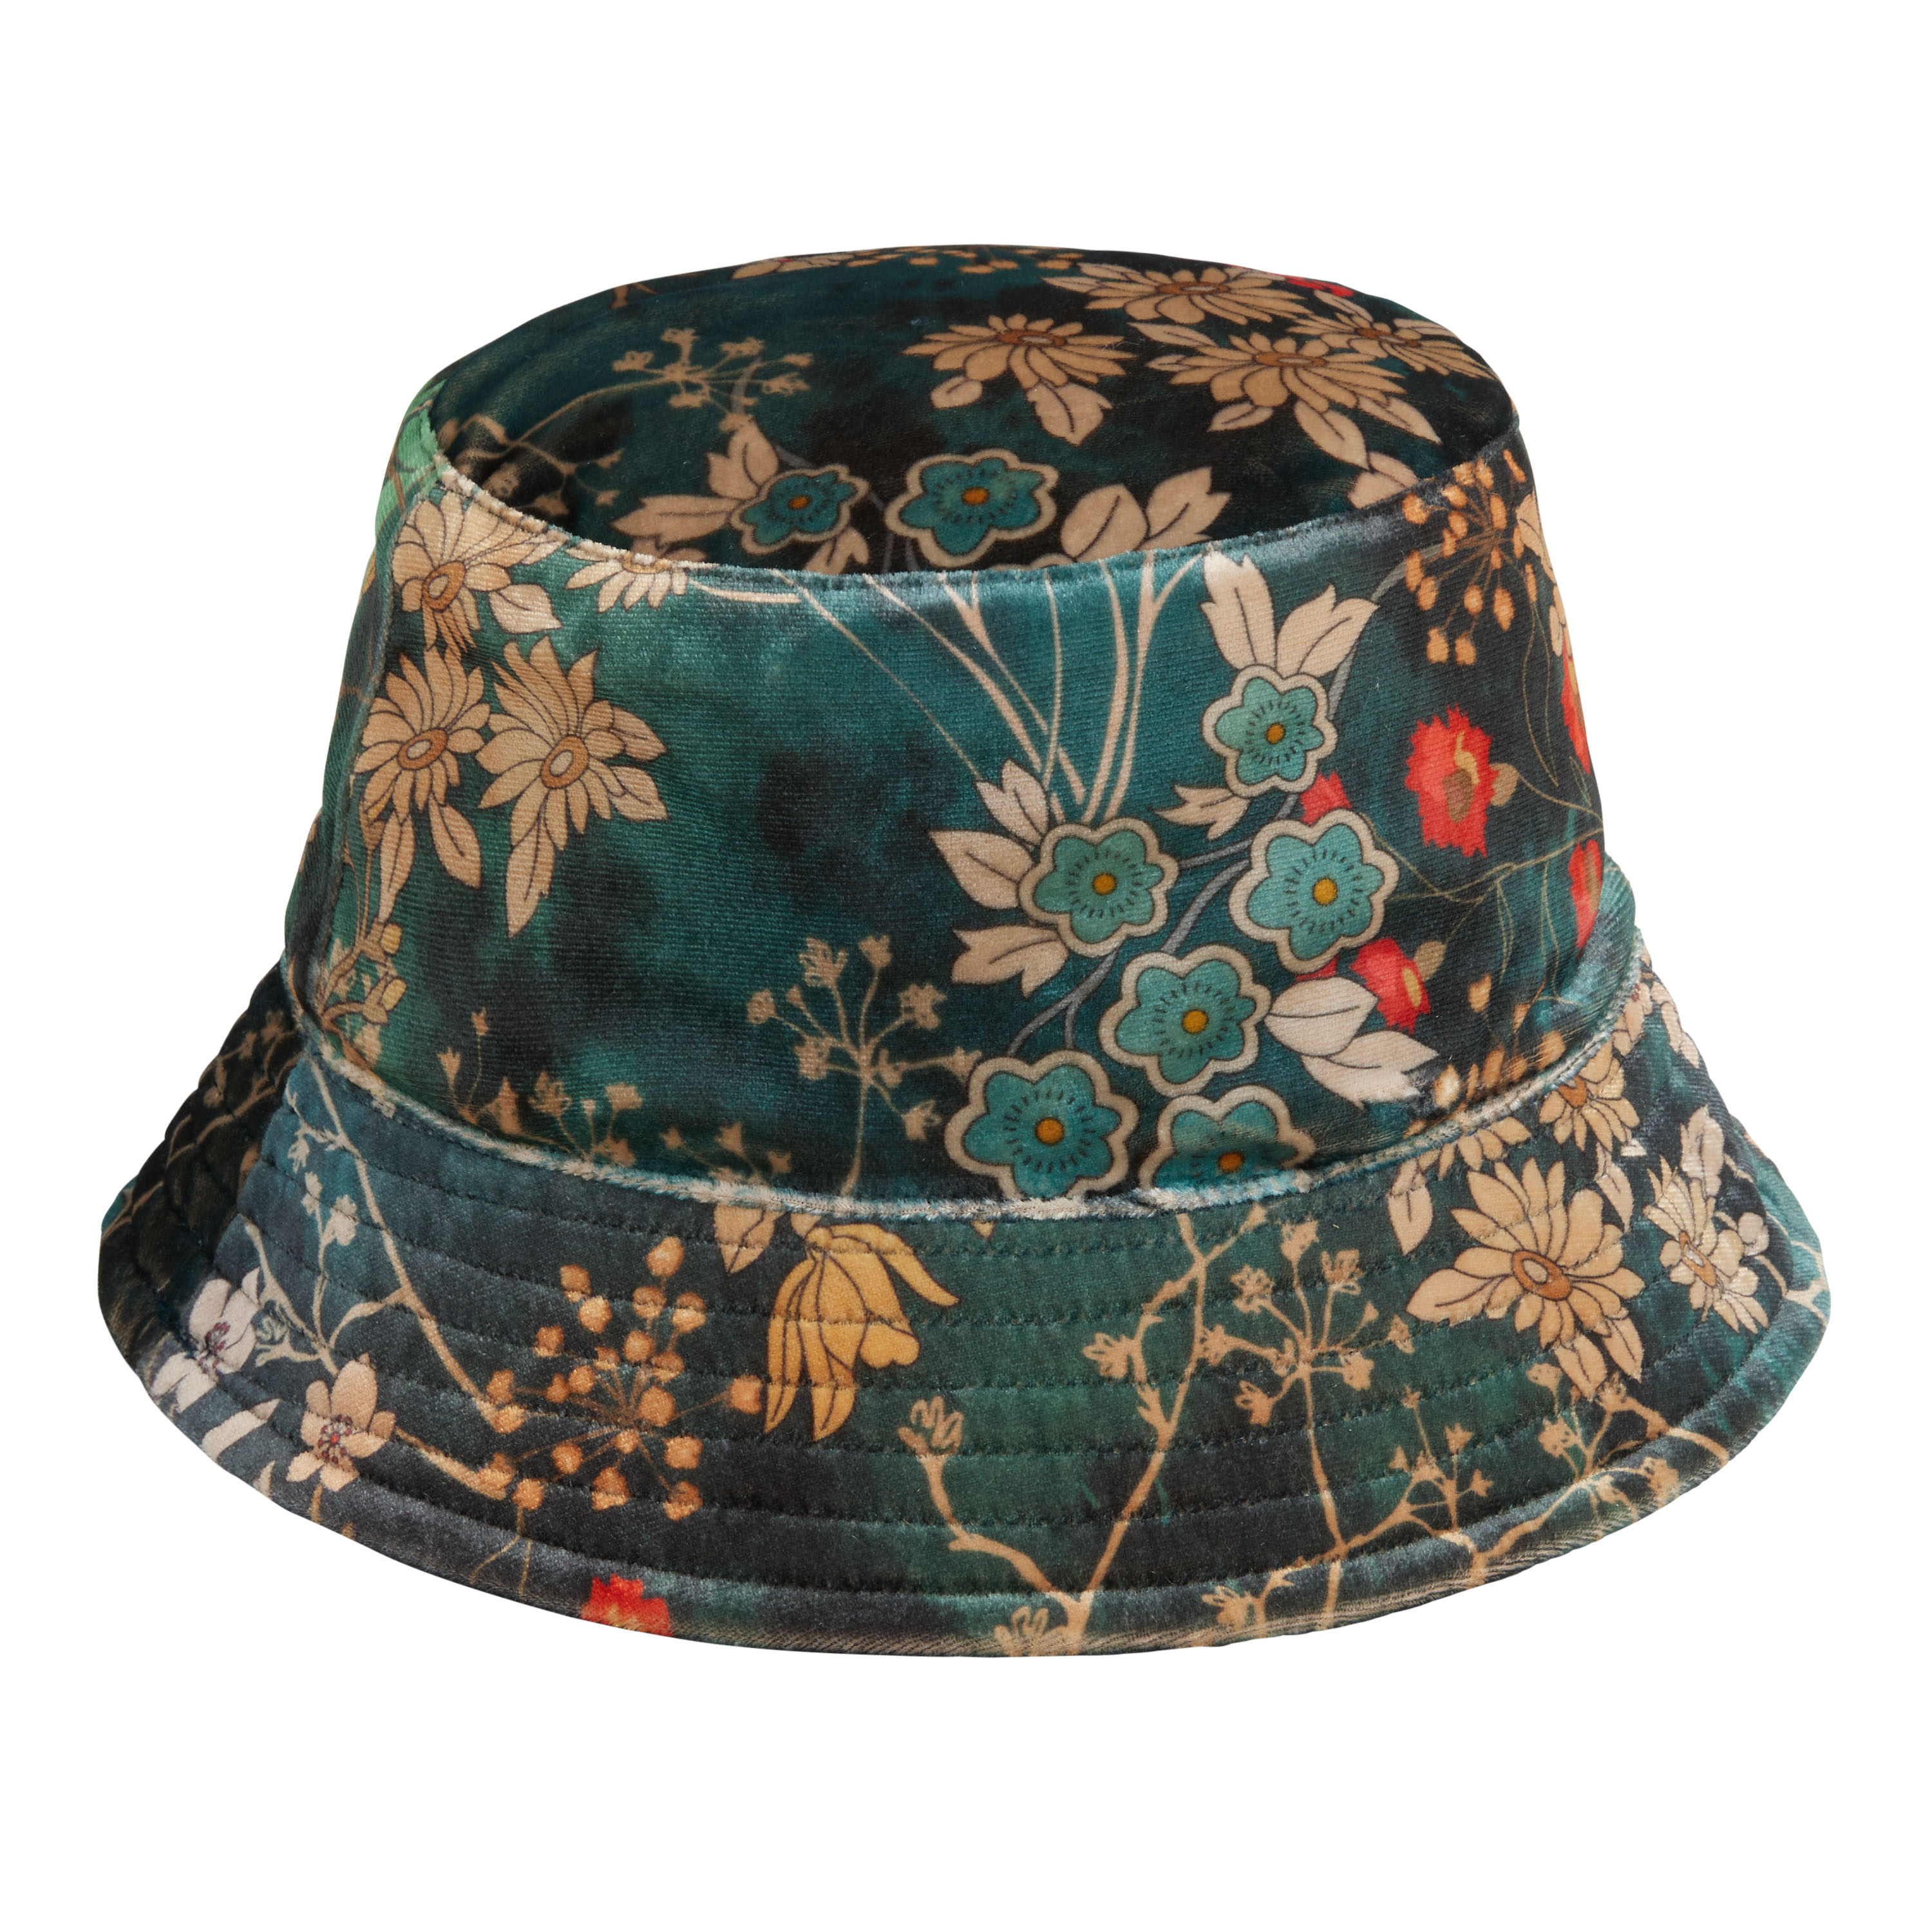 Teal Velvet Floral Reversible Bucket Hat - World Market